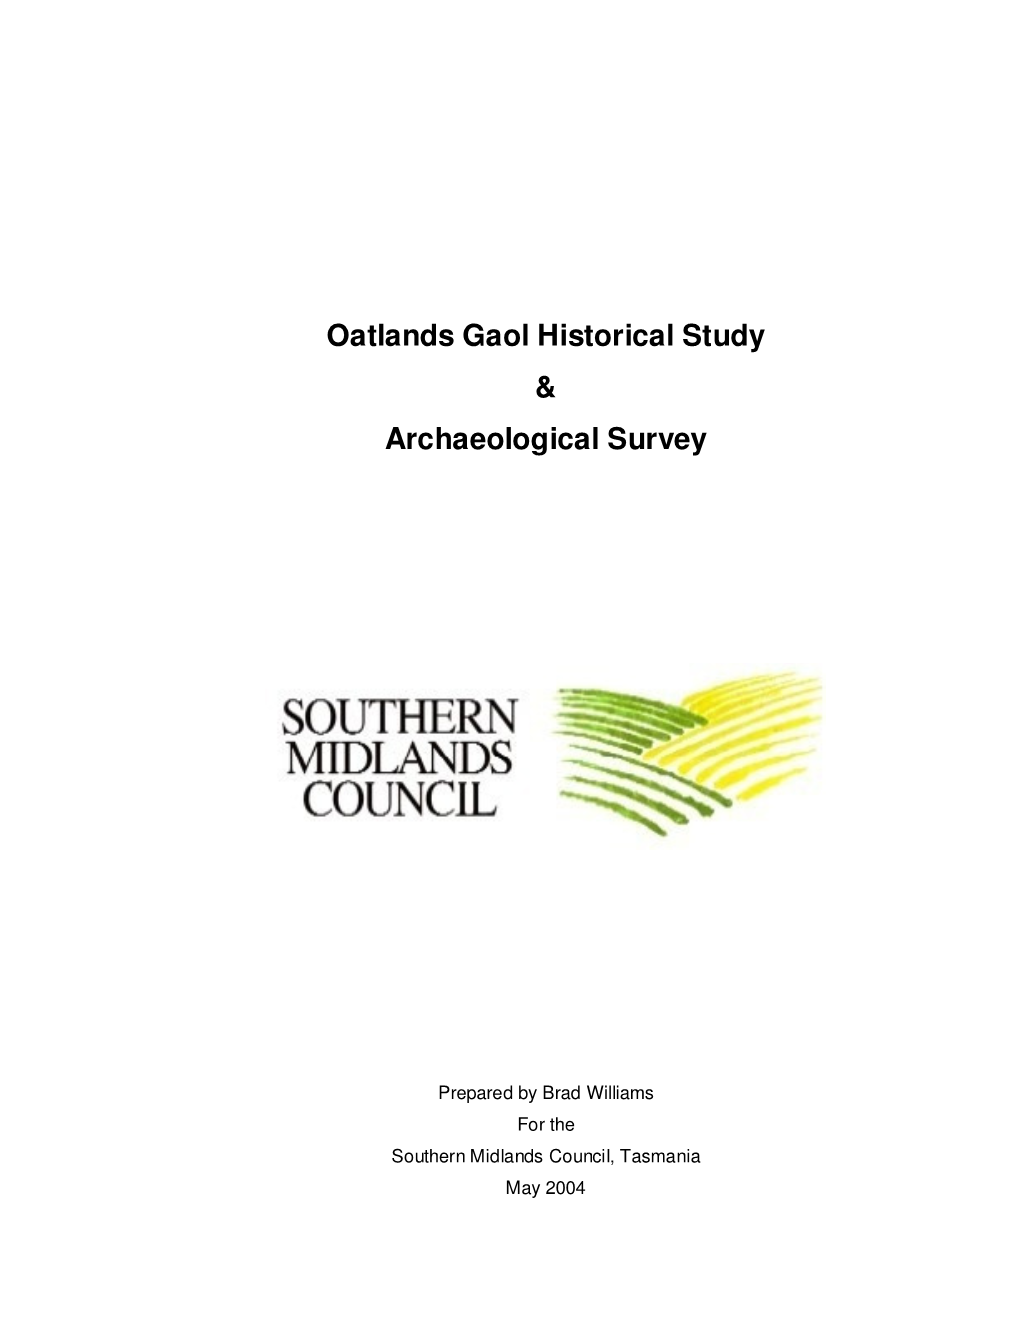 Oatlands Gaol Historical Study & Archaeological Survey